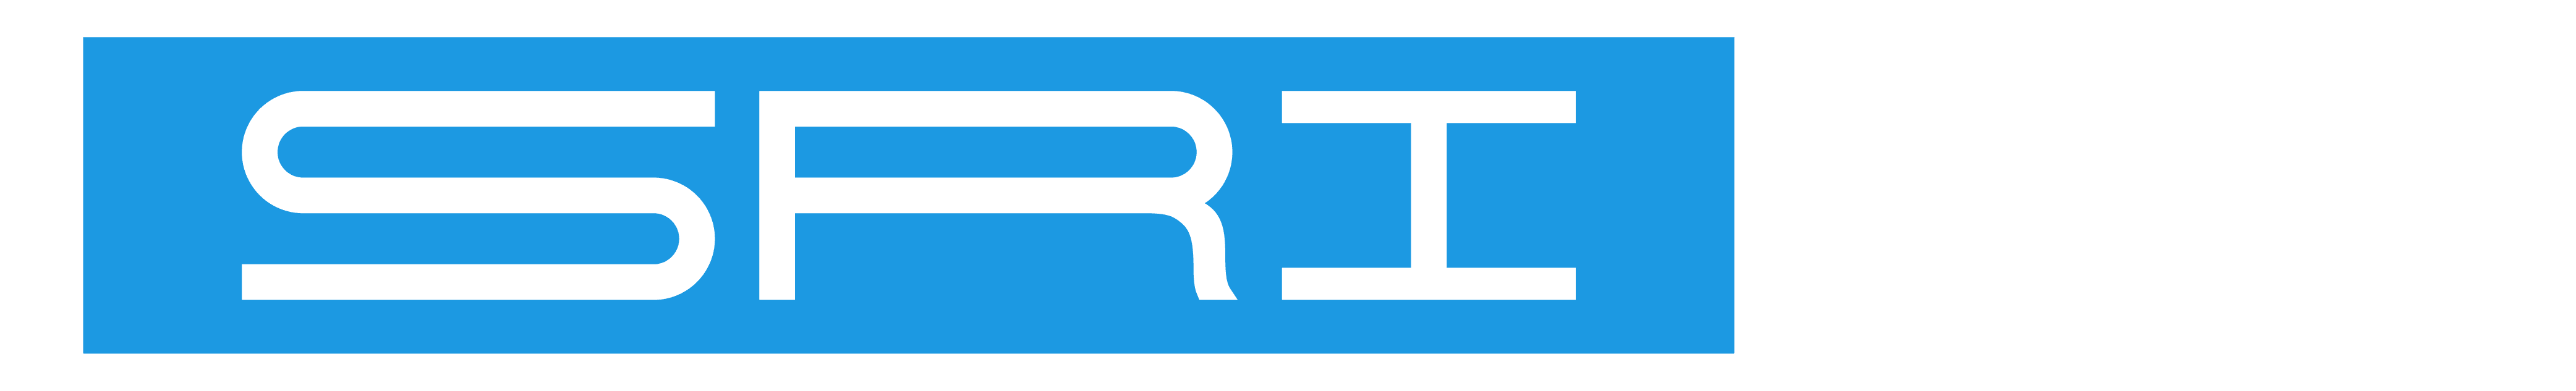 SRI logo